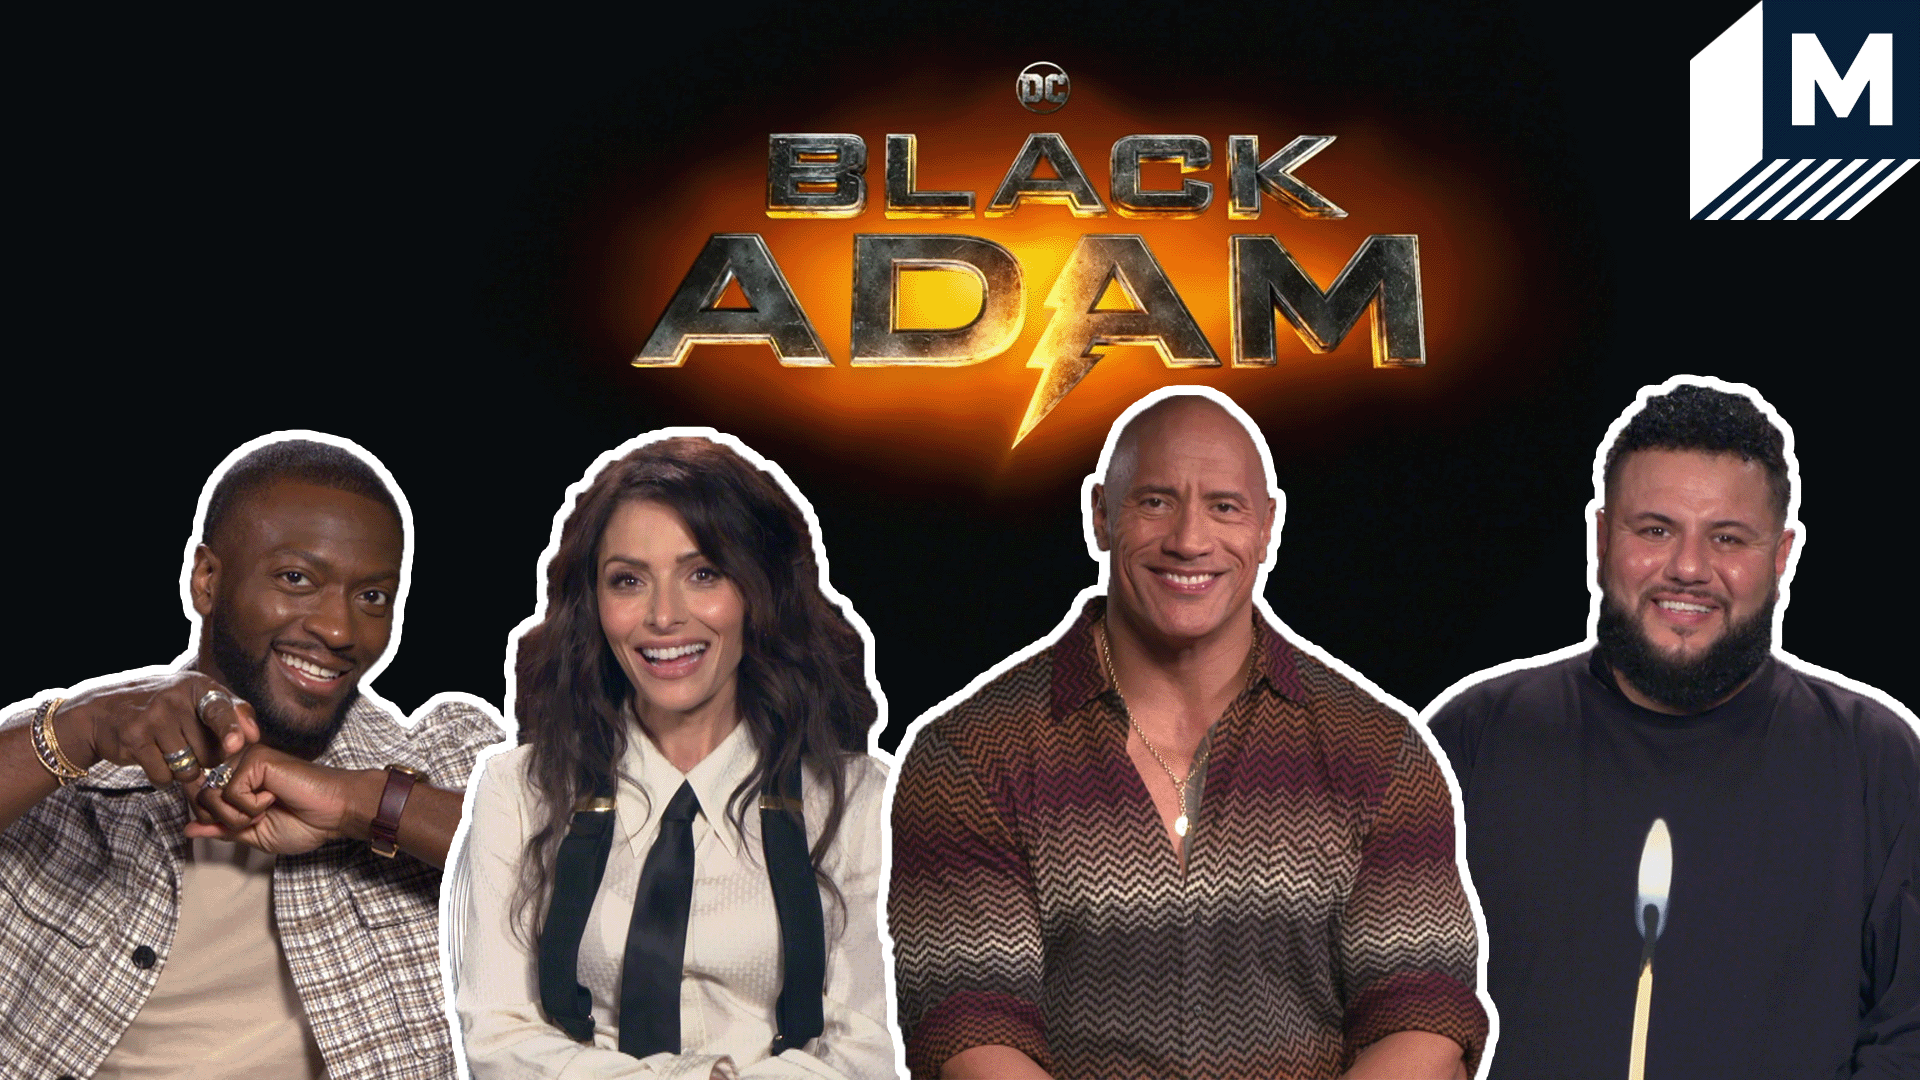 The ‘Black Adam’ cast reveal their superhero catchphrases